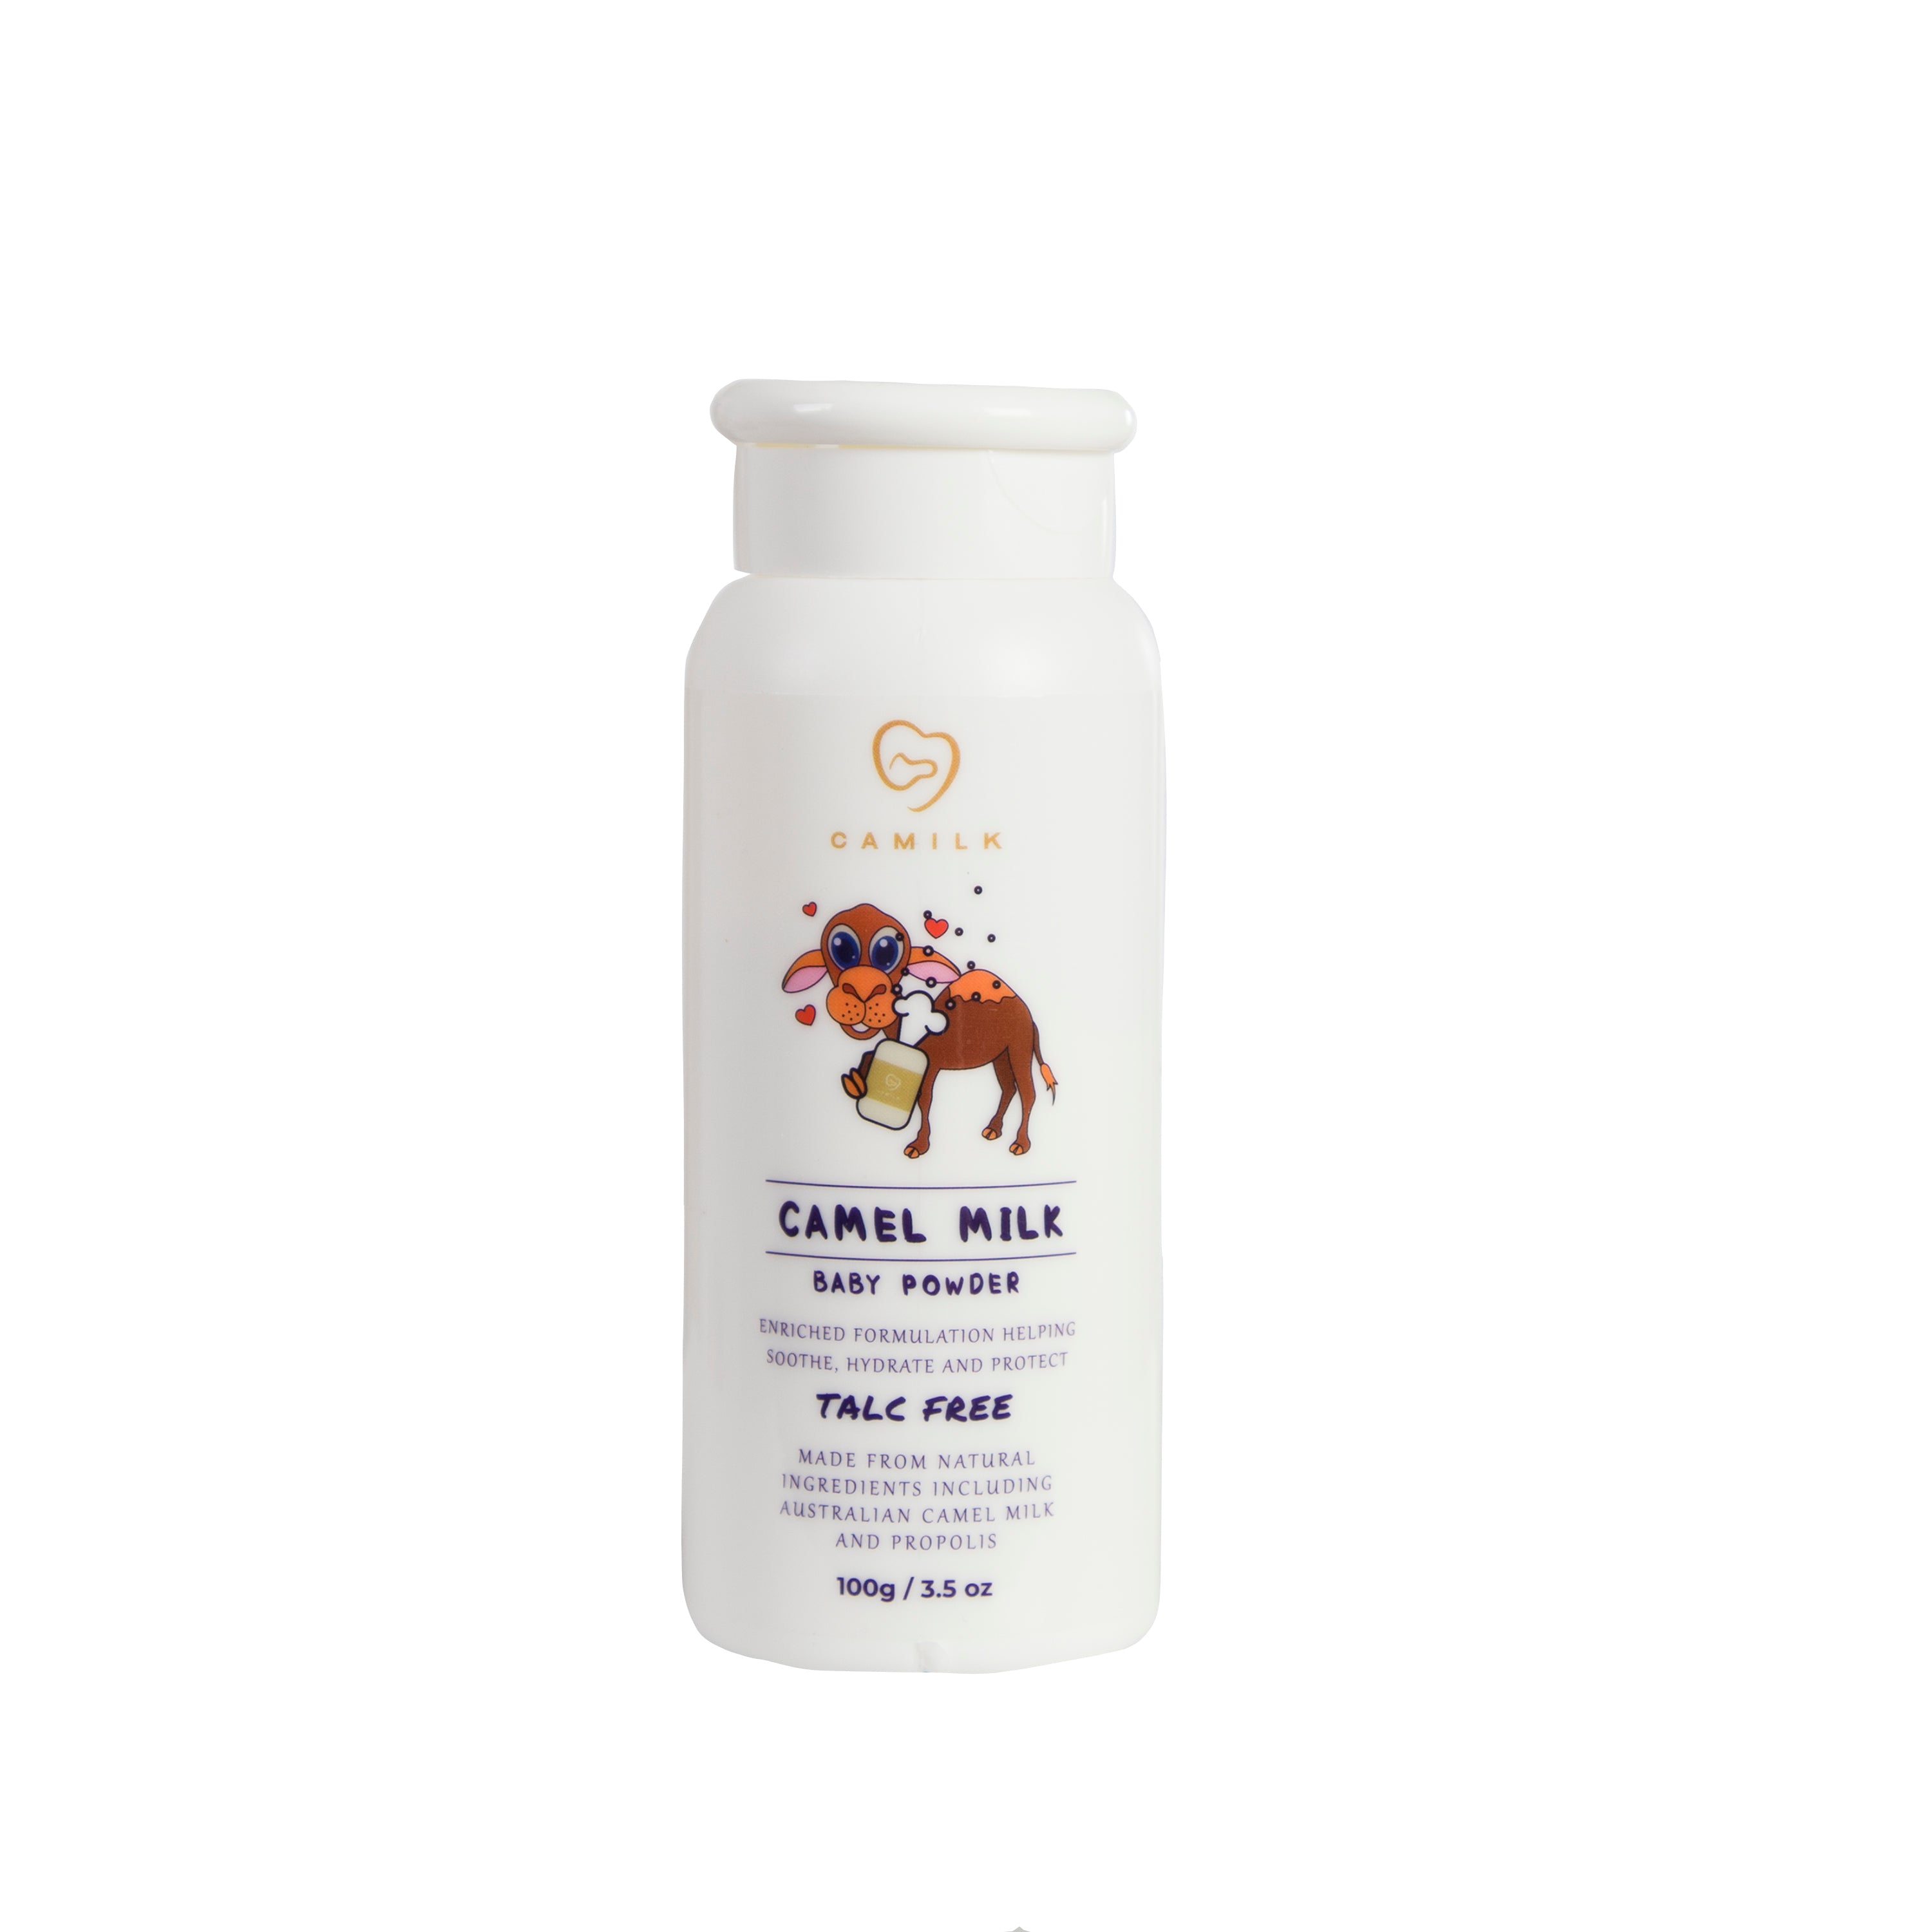 Camilk - Camel Milk Talc Free Baby Powder (100g)